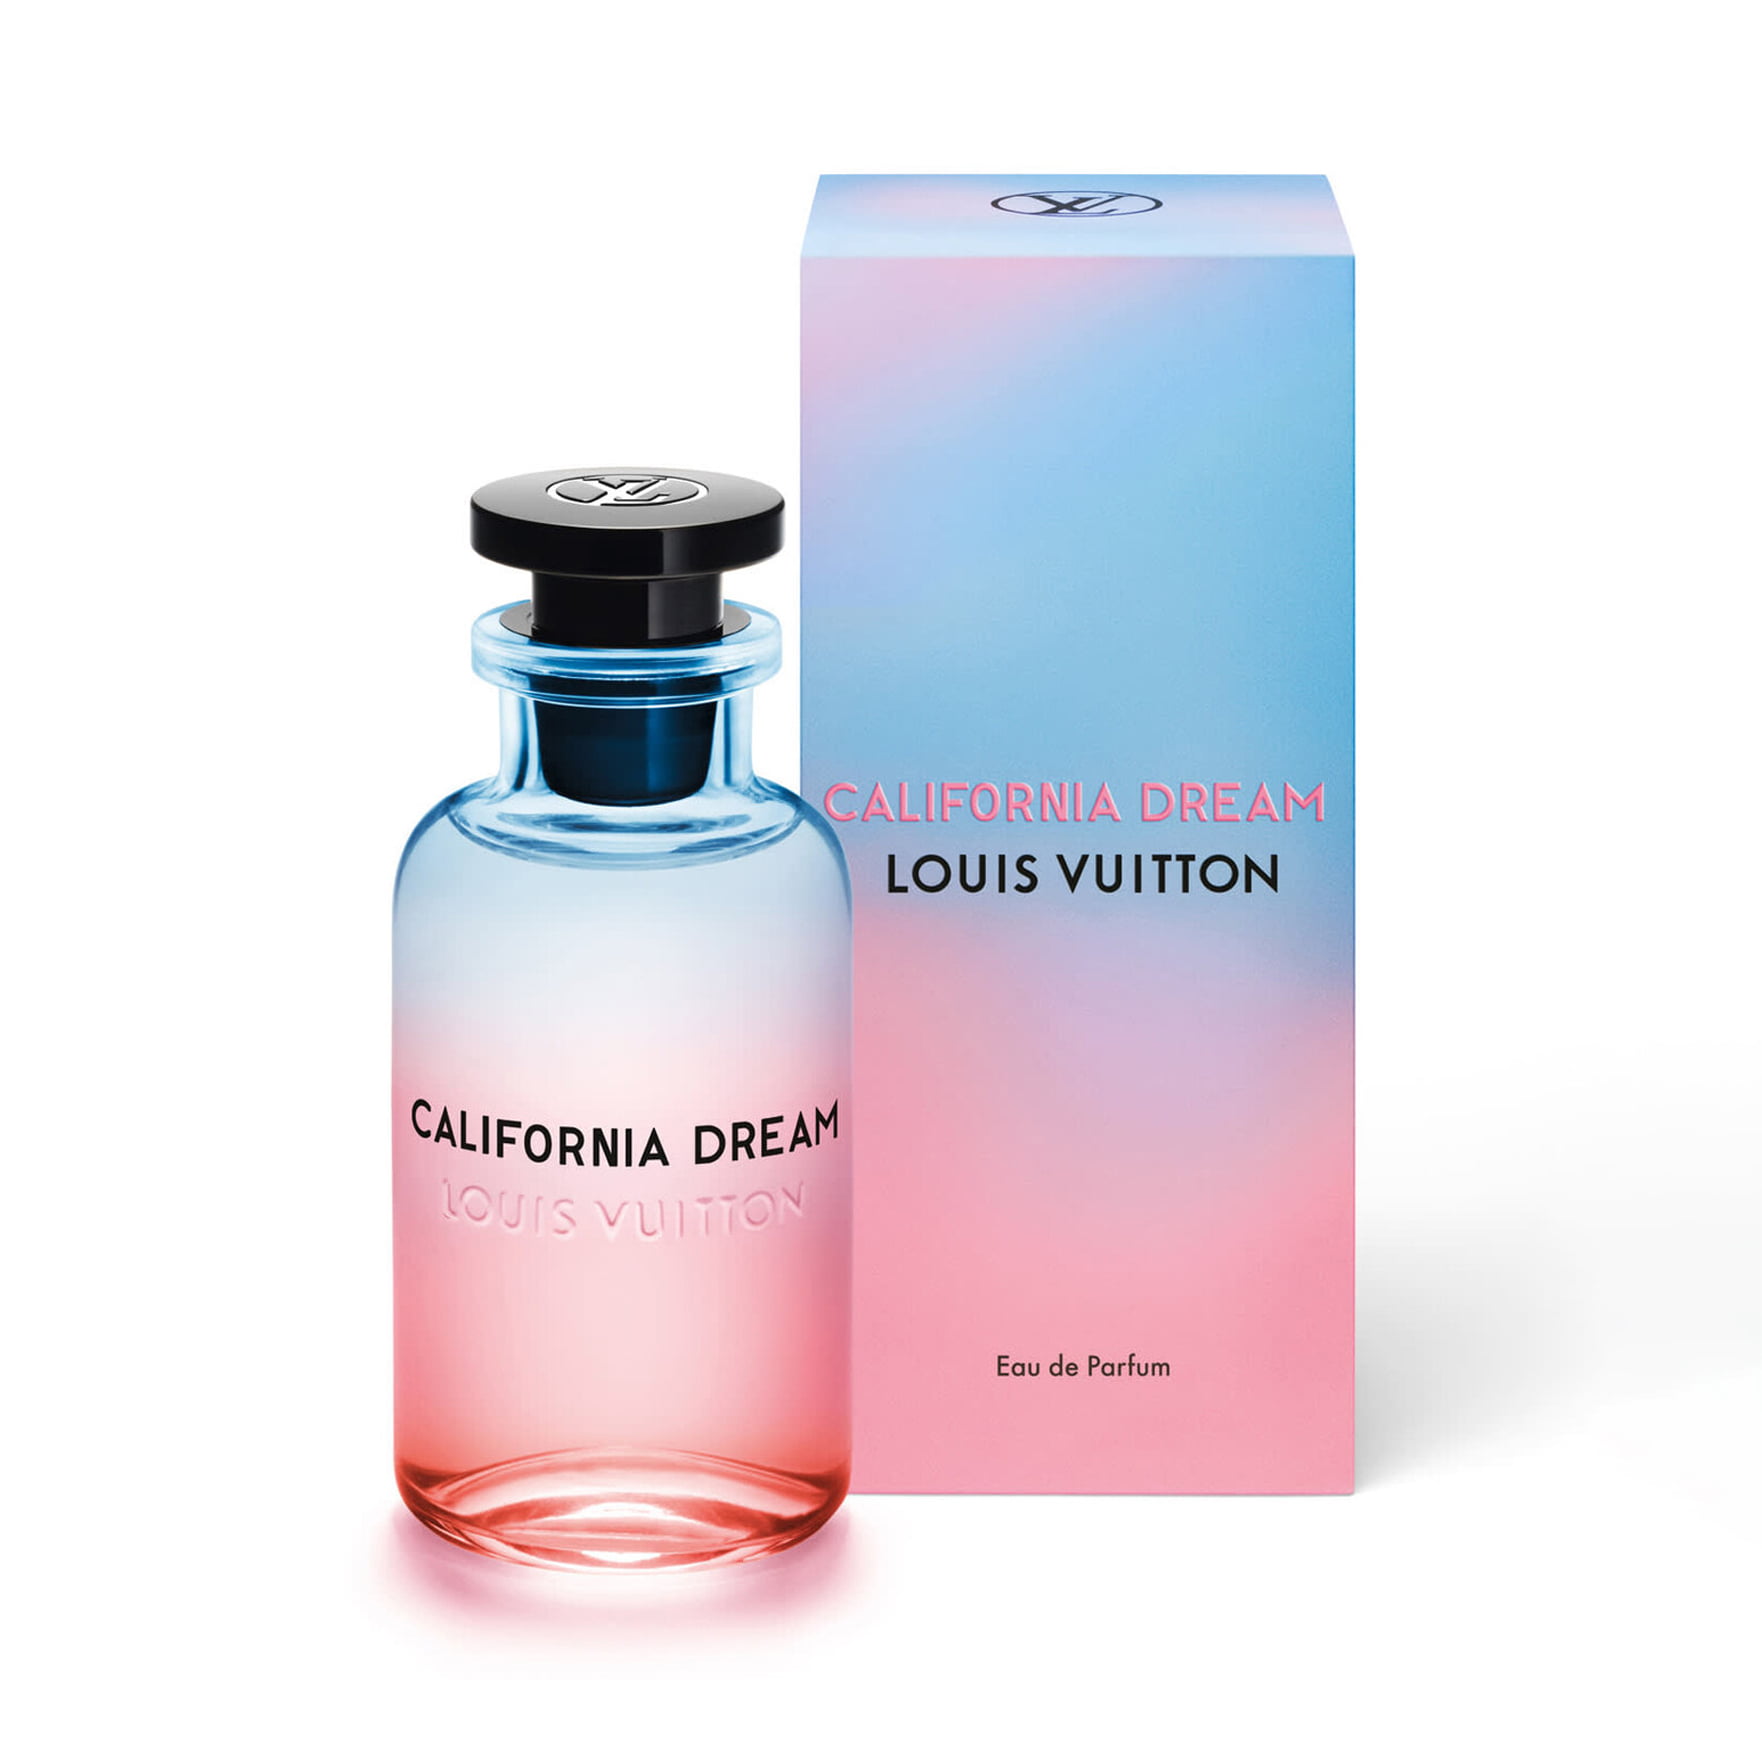 Louis Vuitton California Dream - luxury perfume | Mifashop